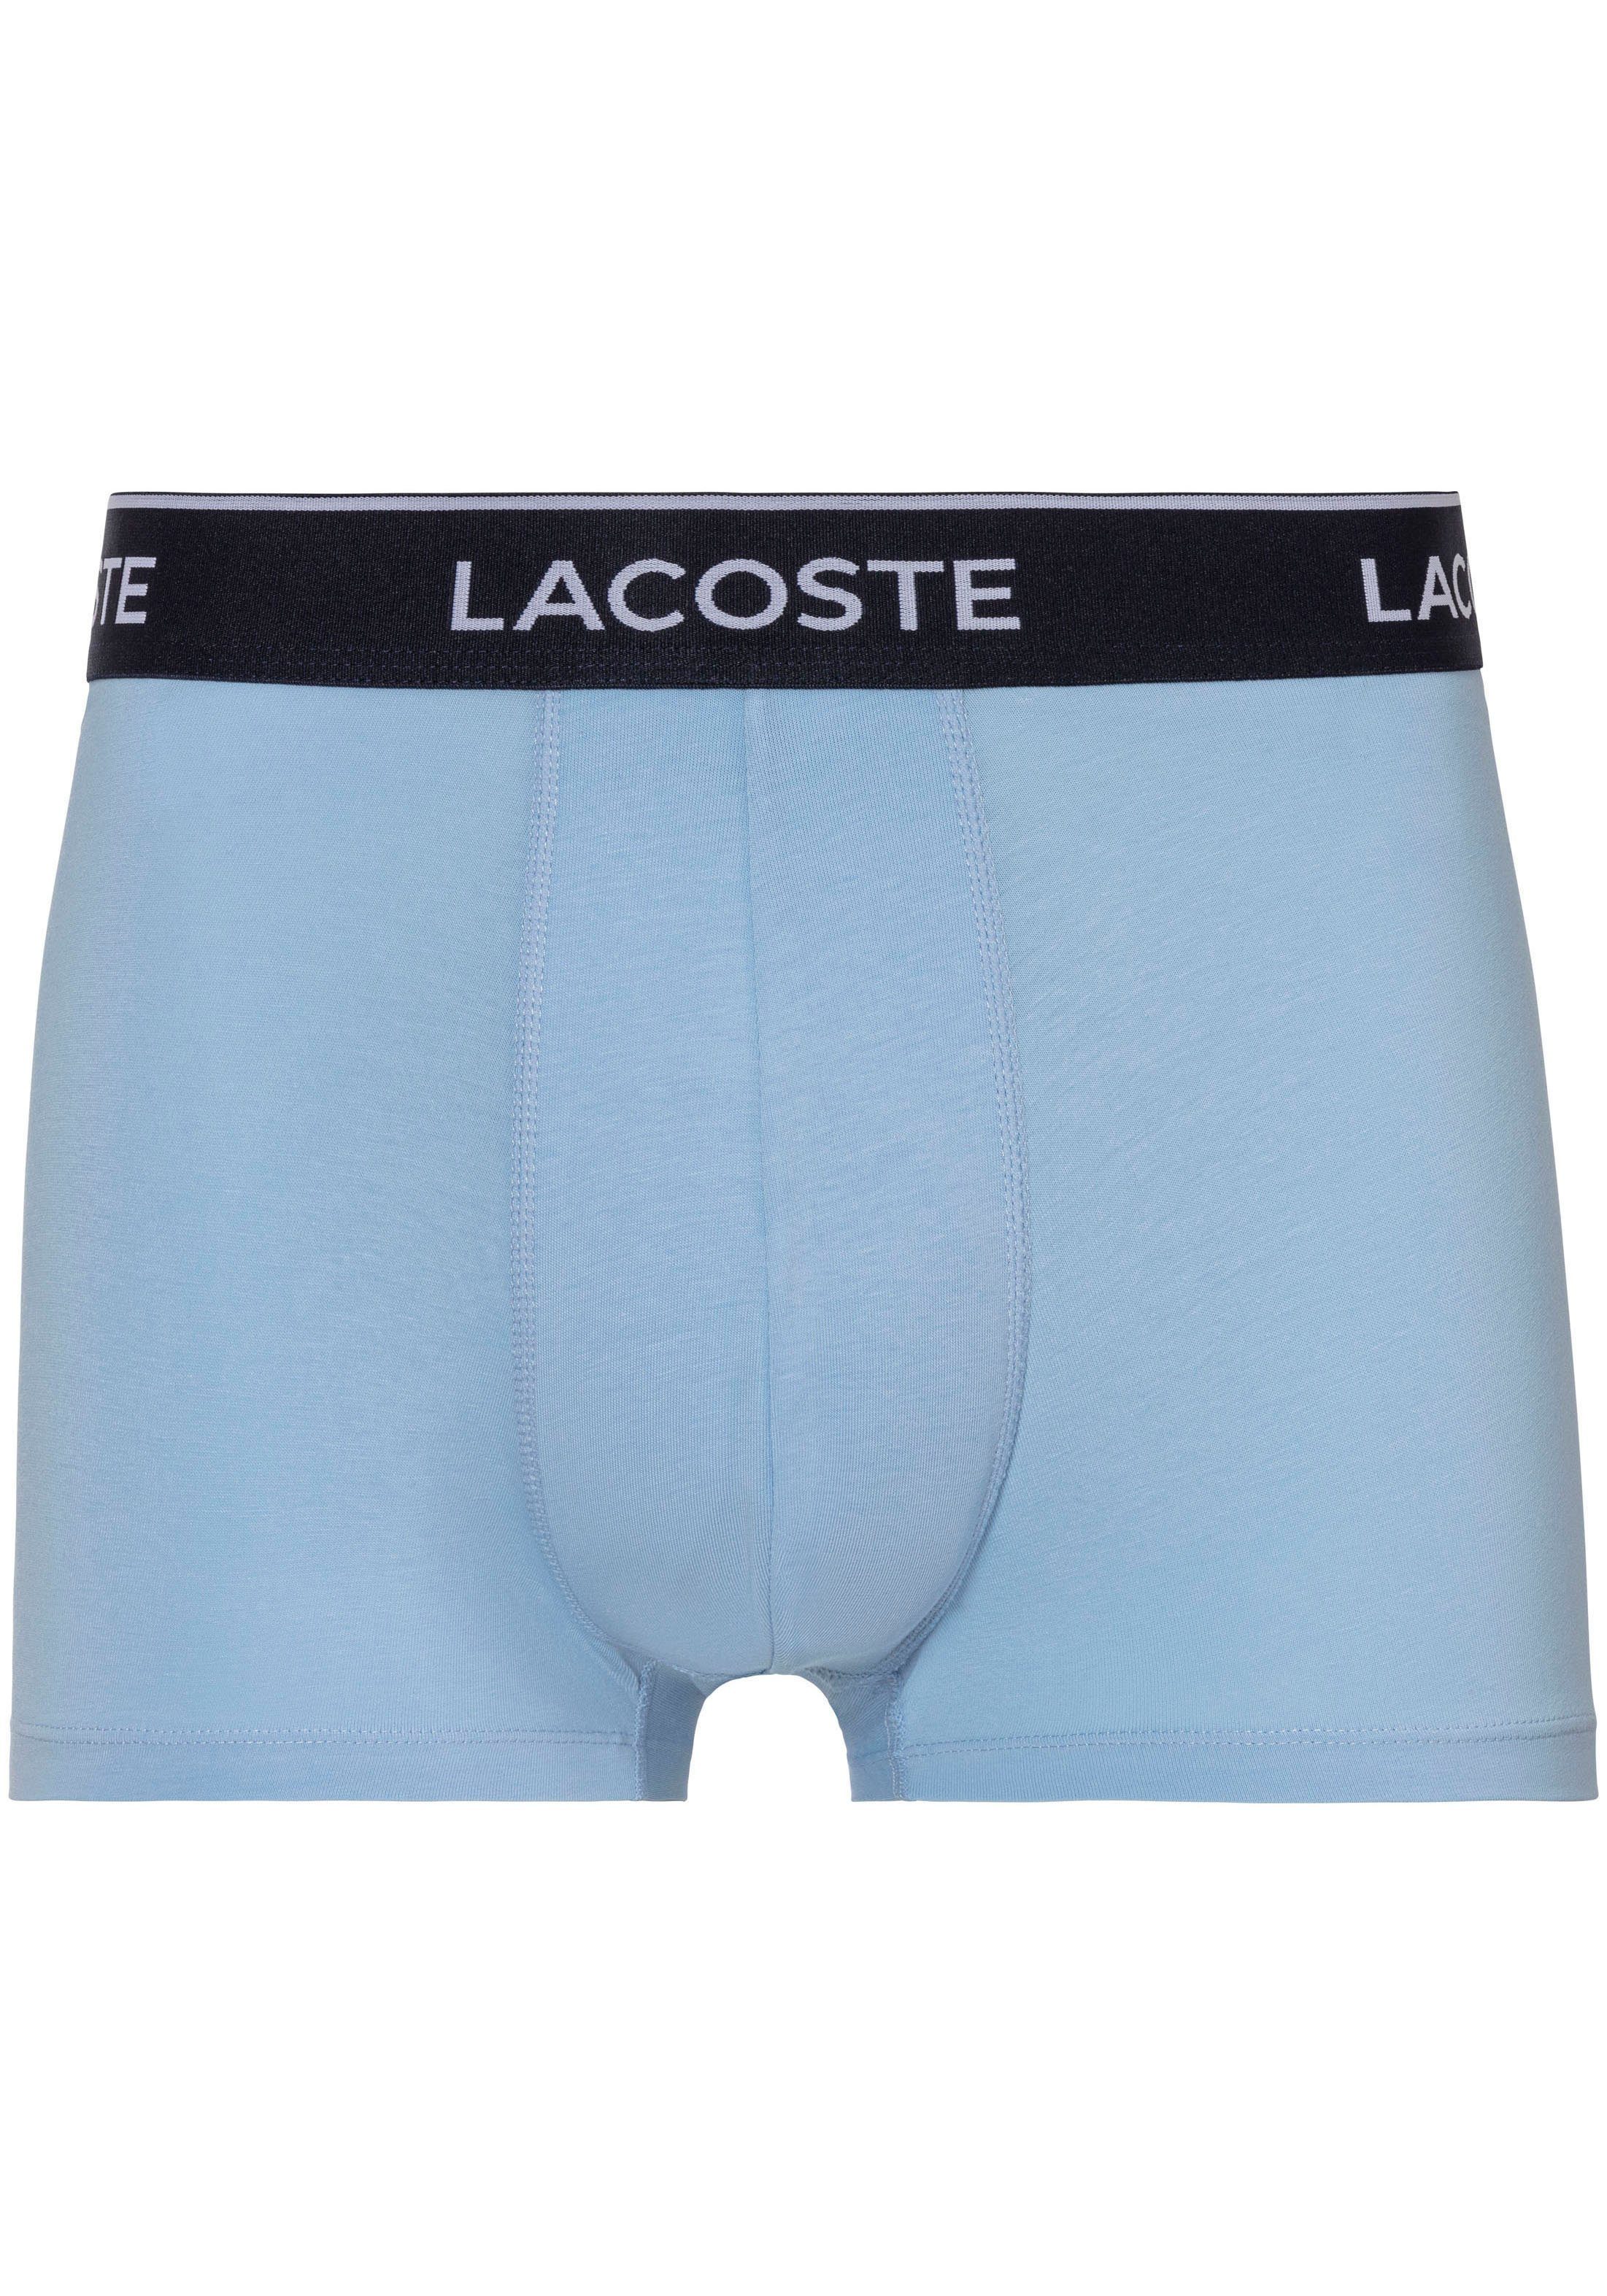 Lacoste Trunk eng grau-blau-hb Premium atmungsaktivem 3-St., 3er-Pack) (Packung, aus Boxershorts Material Herren Lacoste